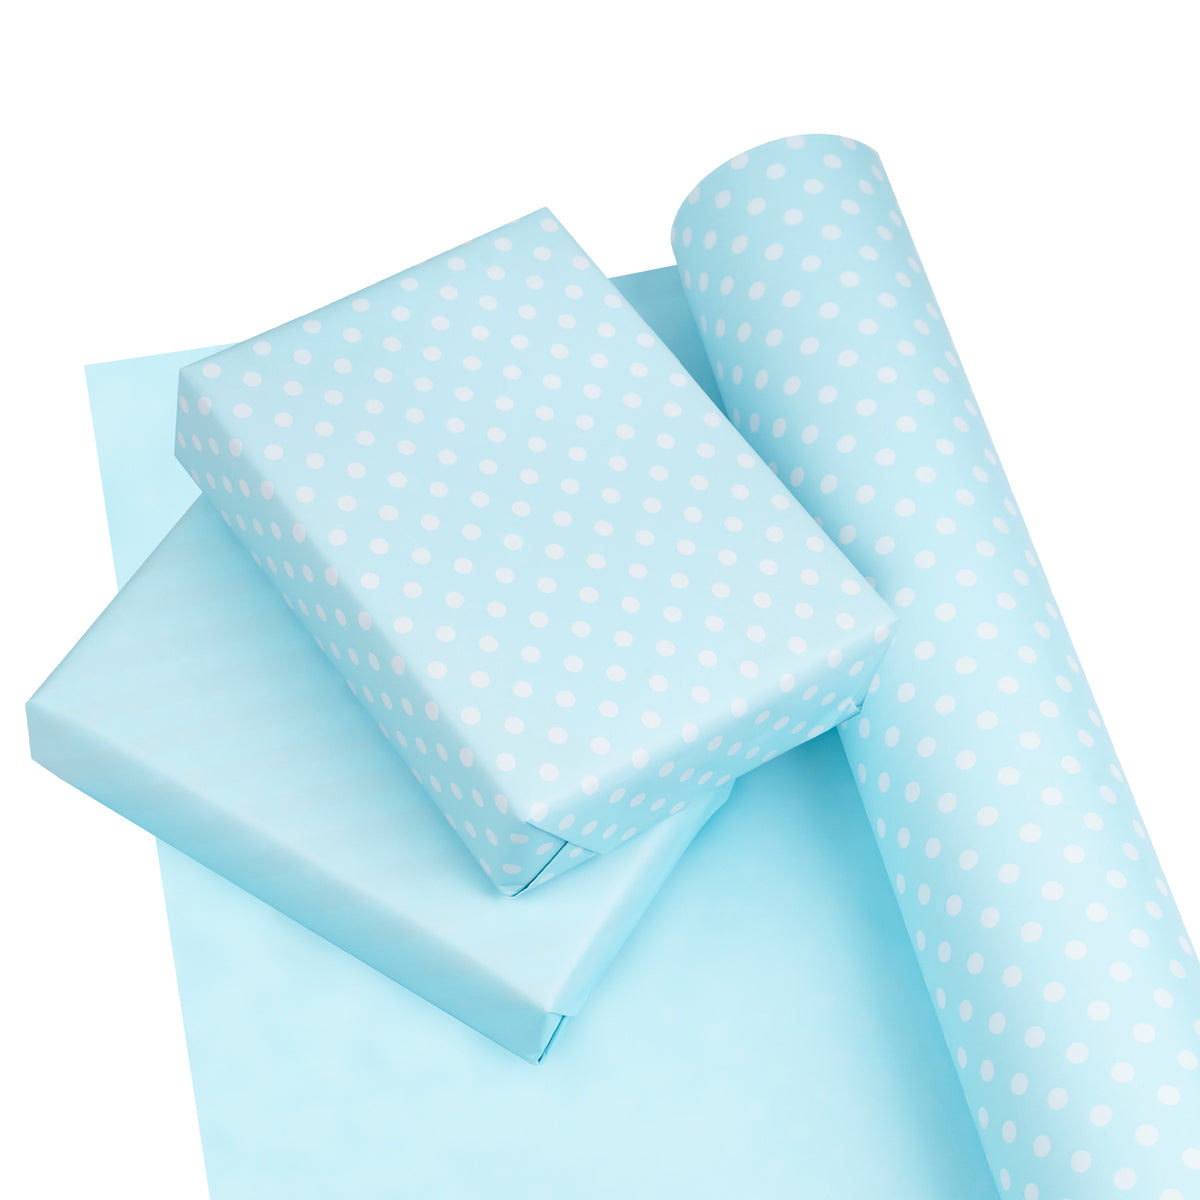  MR FIVE Blue Polka Dot Baby Shower Tissue Paper Bulk,20 x  28,Blue Gift Wrapping Tissue Paper for Gift Bags,Baby Shower Tissue Paper  for Boy,30 Sheets : Health & Household